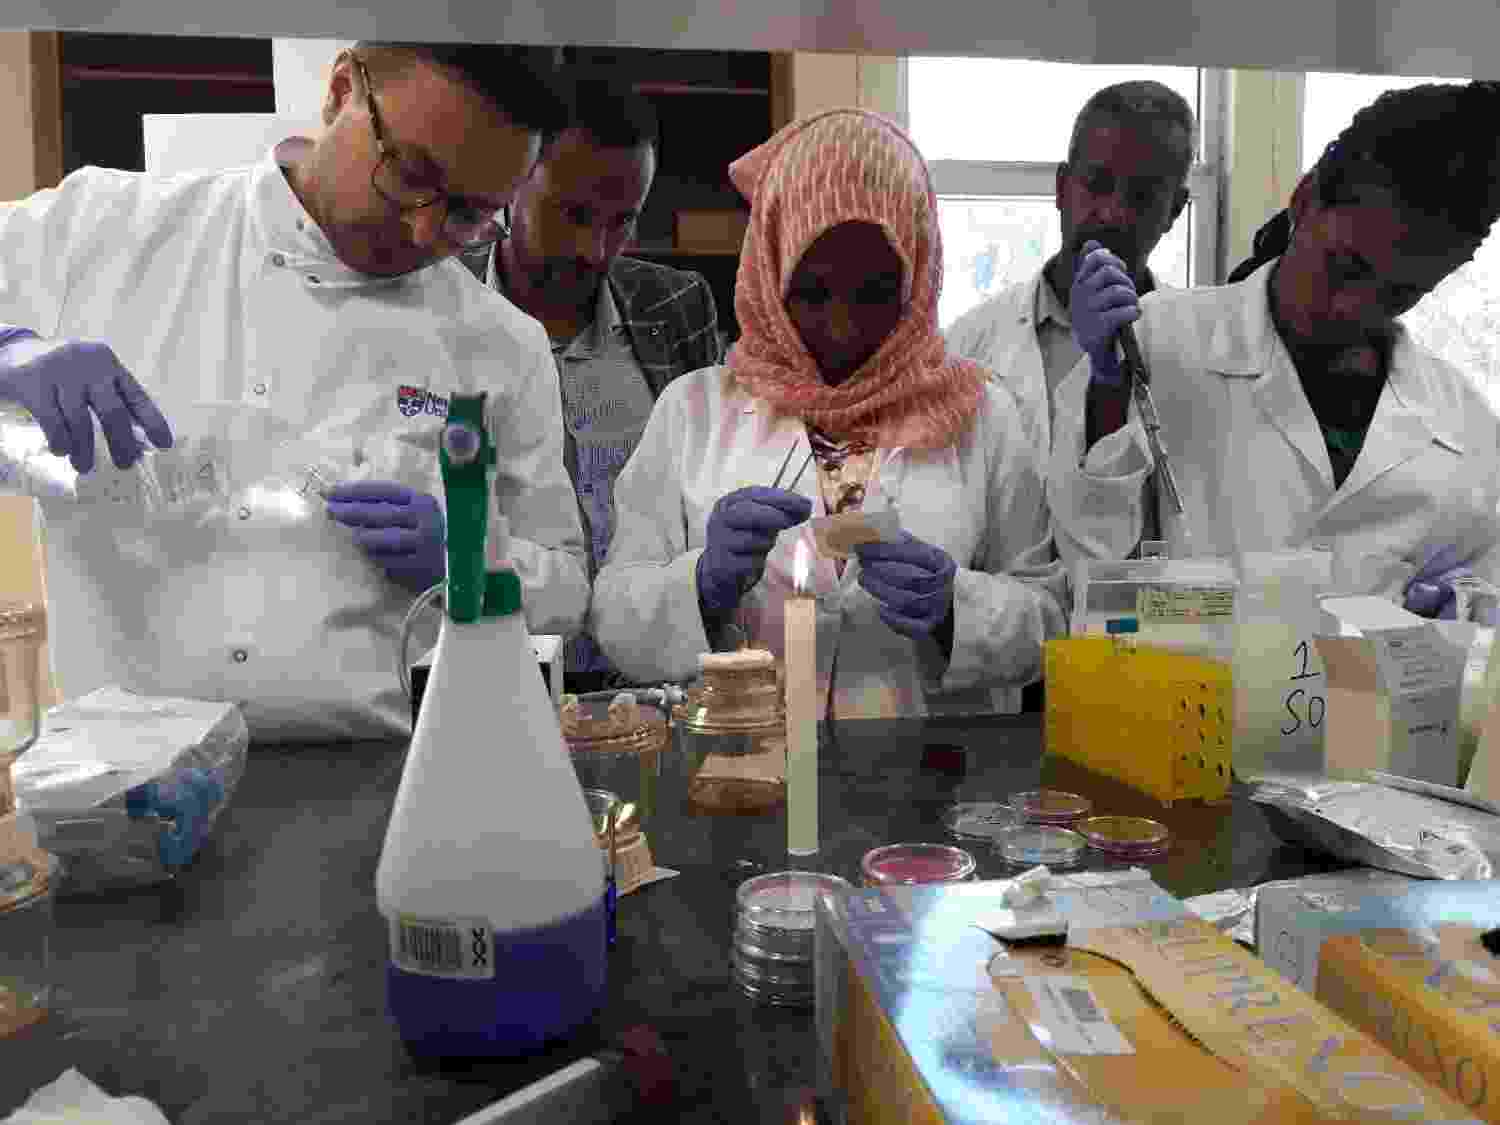 workshop participants testing water samples